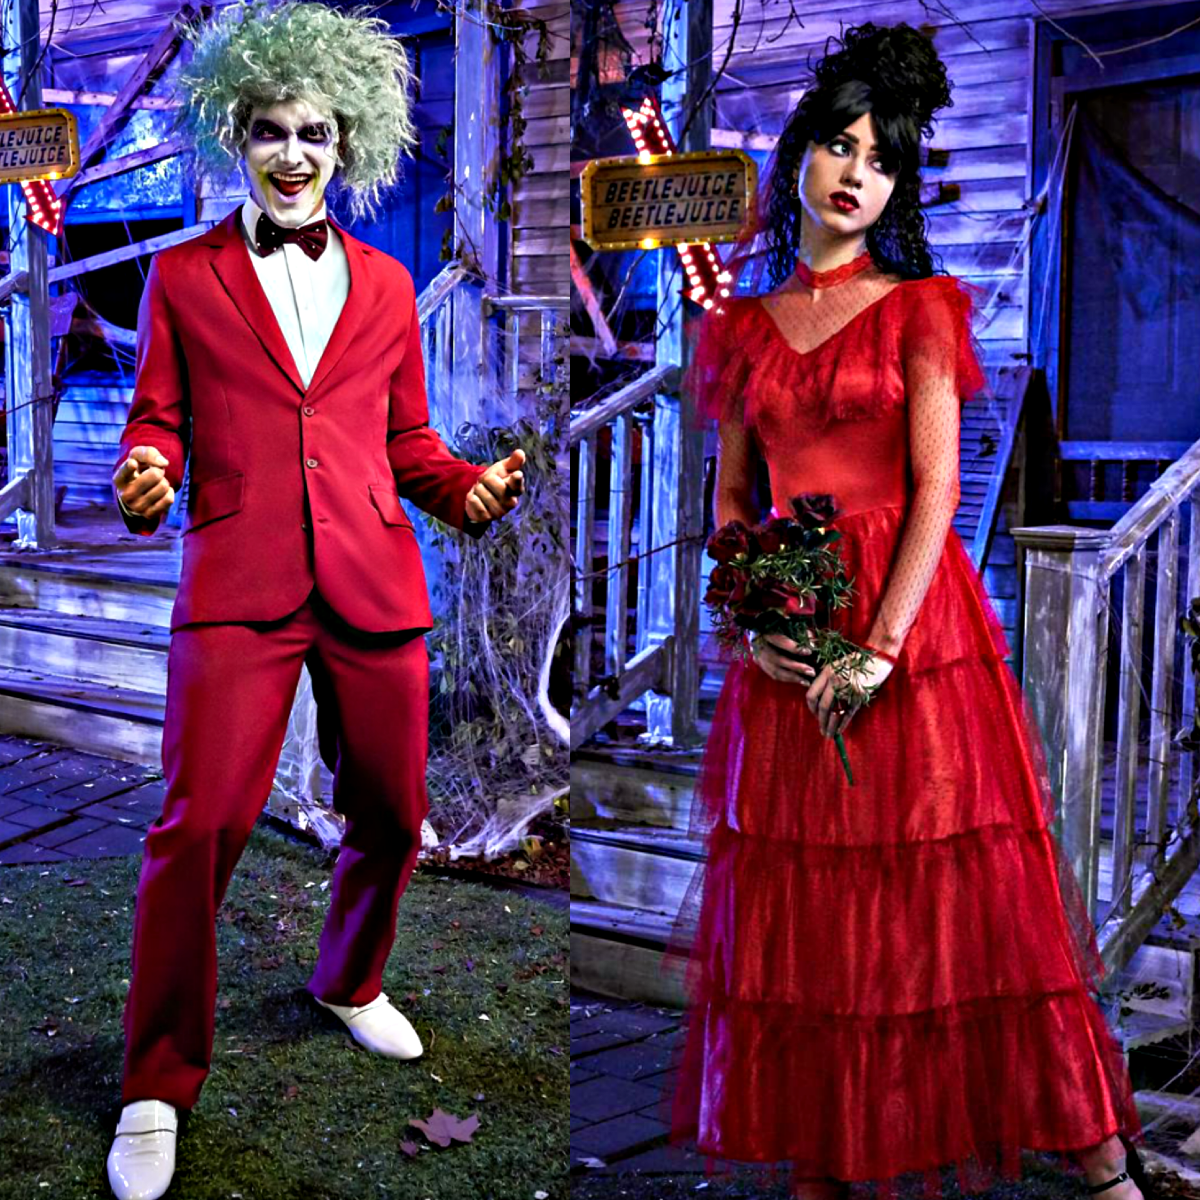 Dress Like Jake Long  Jake long, Cute couple halloween costumes